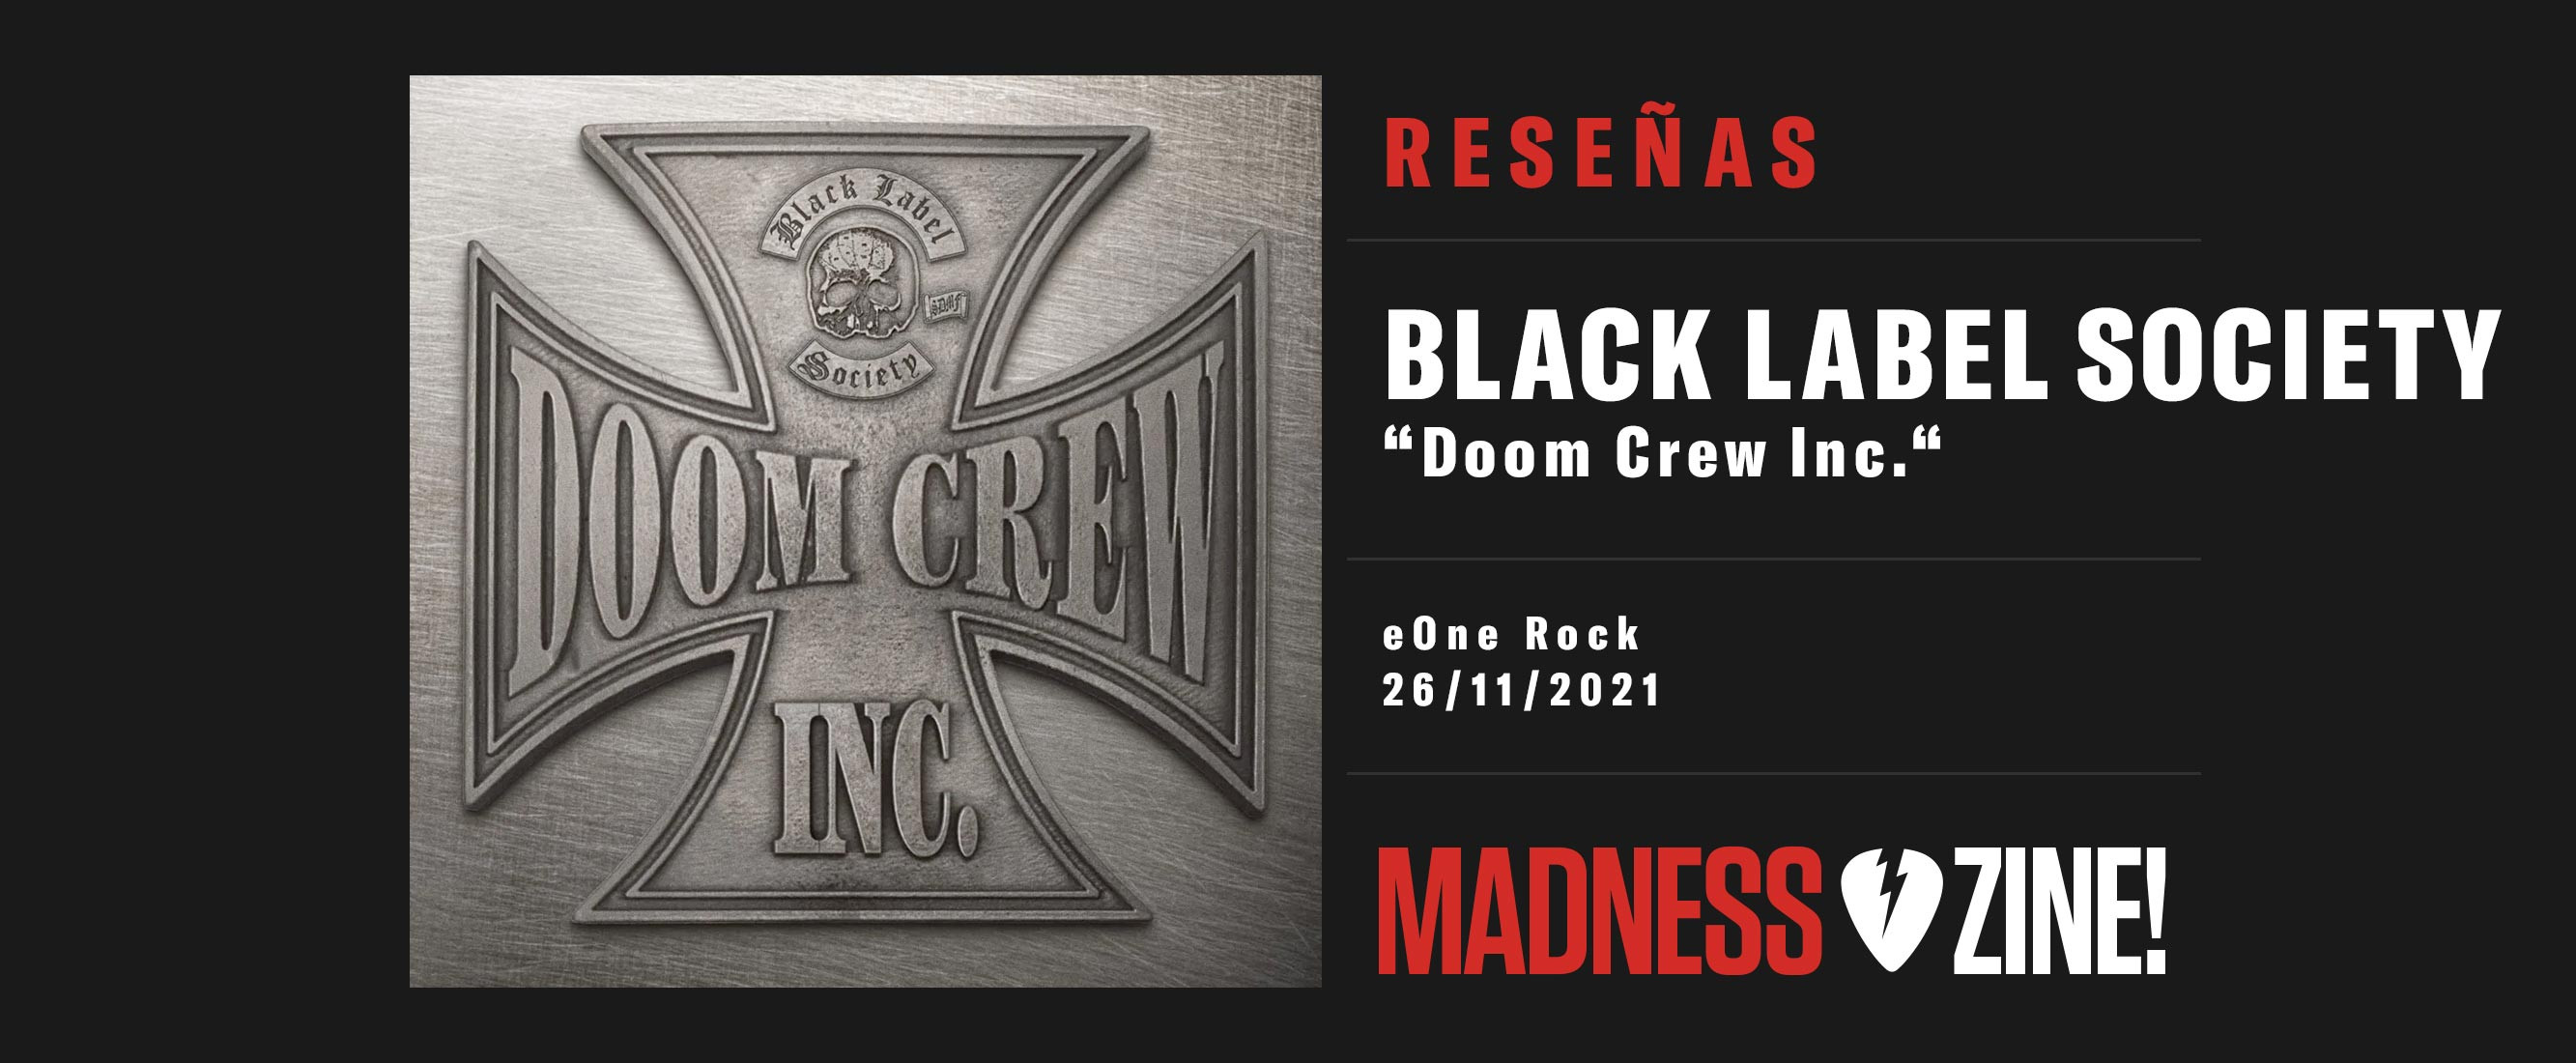 Reseña: Black Label Society 'Doom Crew Inc.'